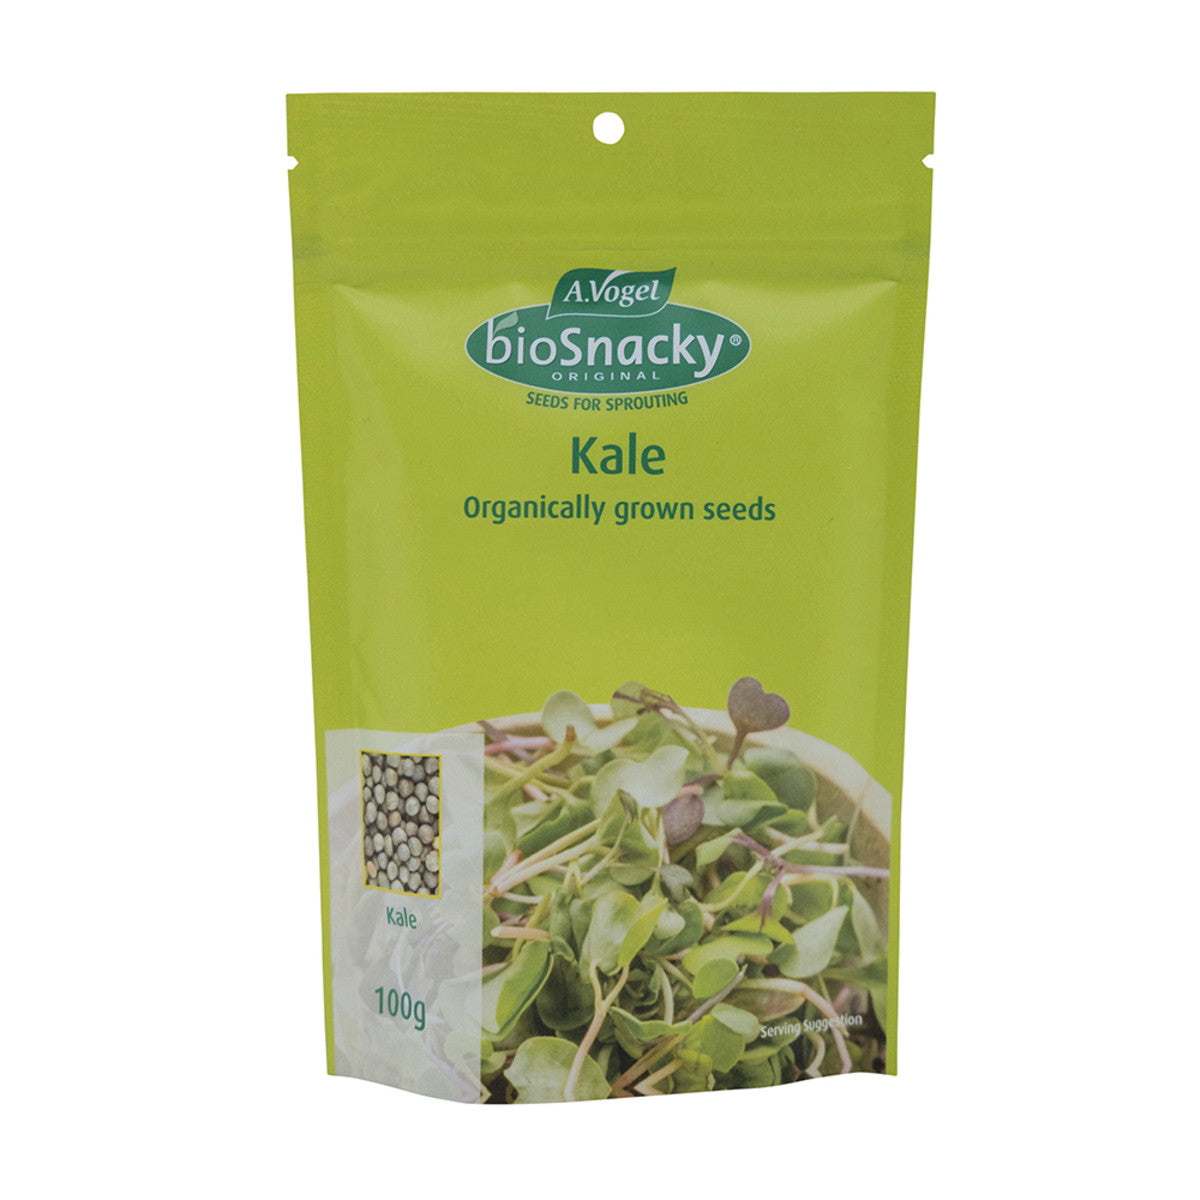 Vogel Biosnacky Organic Kale Seeds 100g